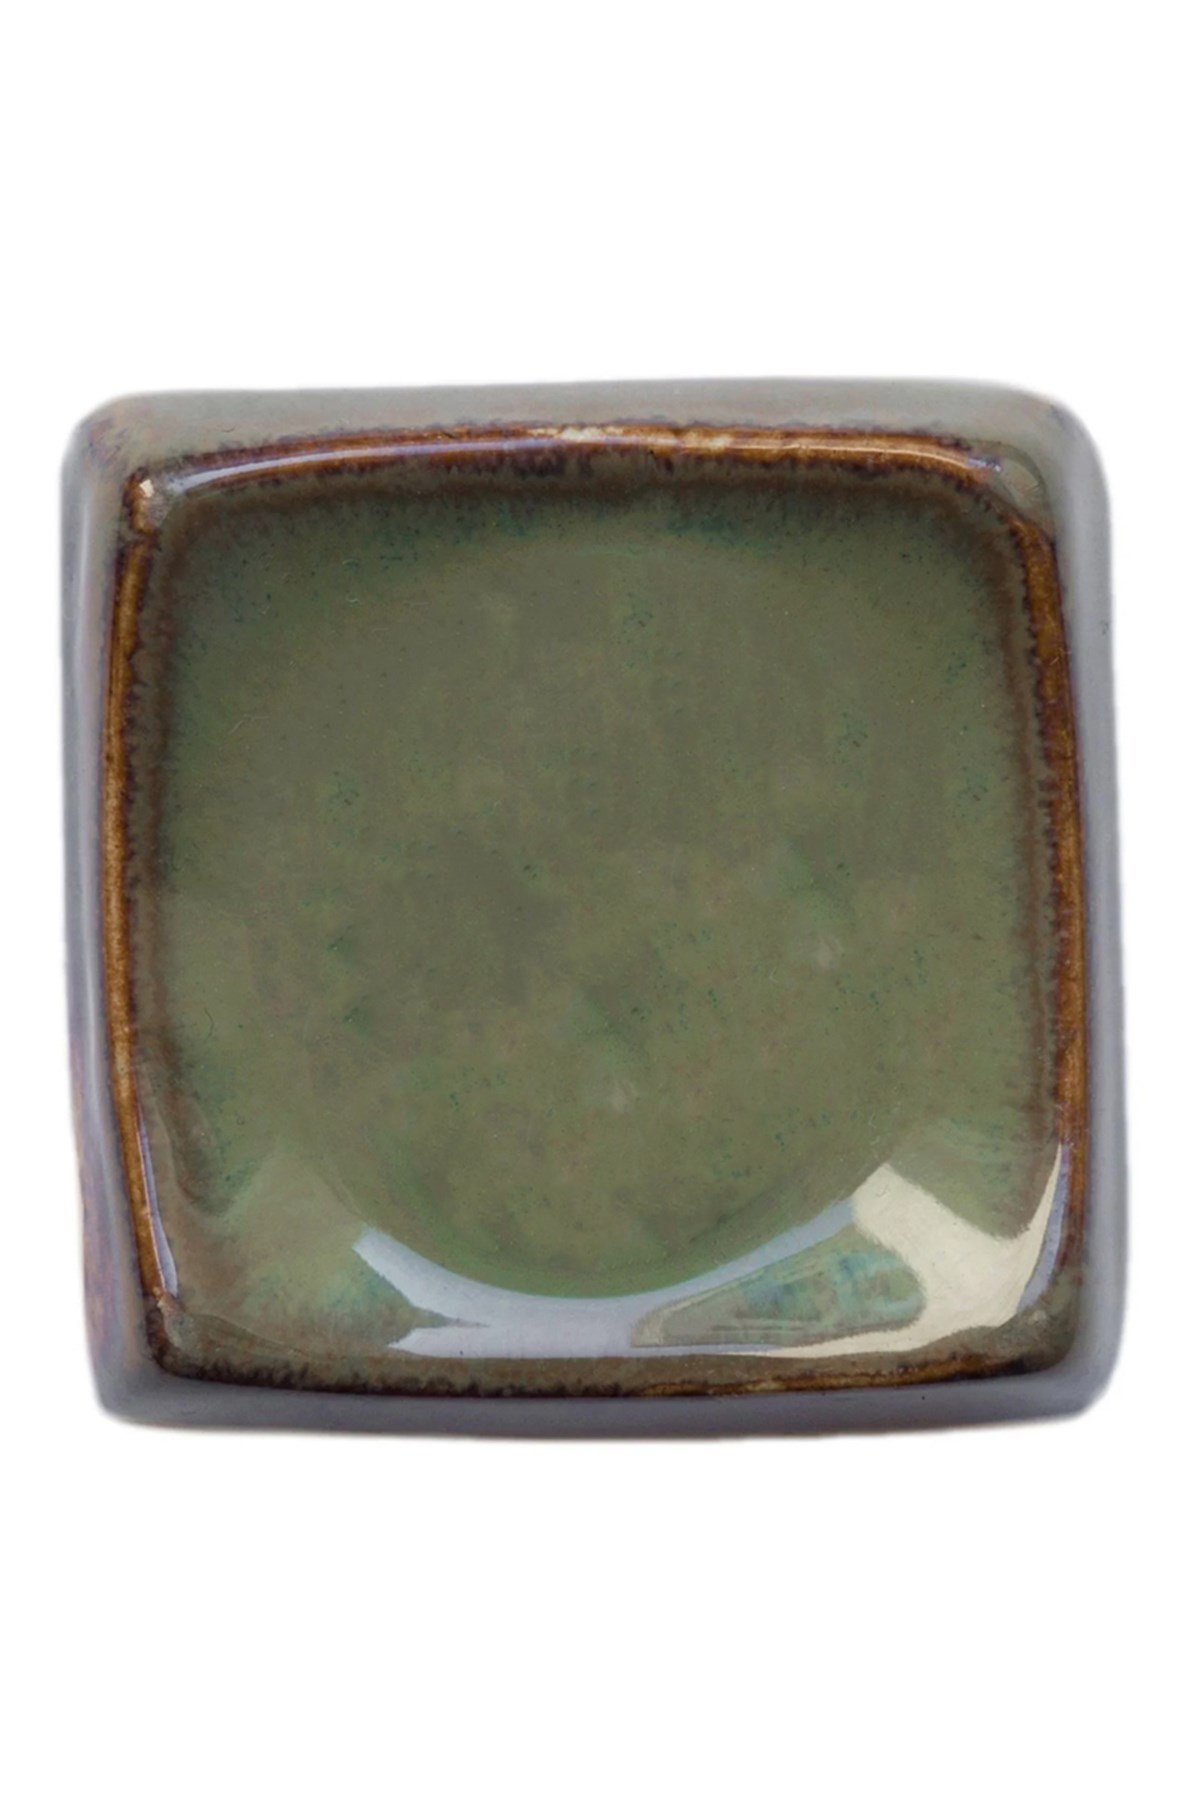 Refsan Stoneware Seramik Sırı - SG 1131 Moss Green